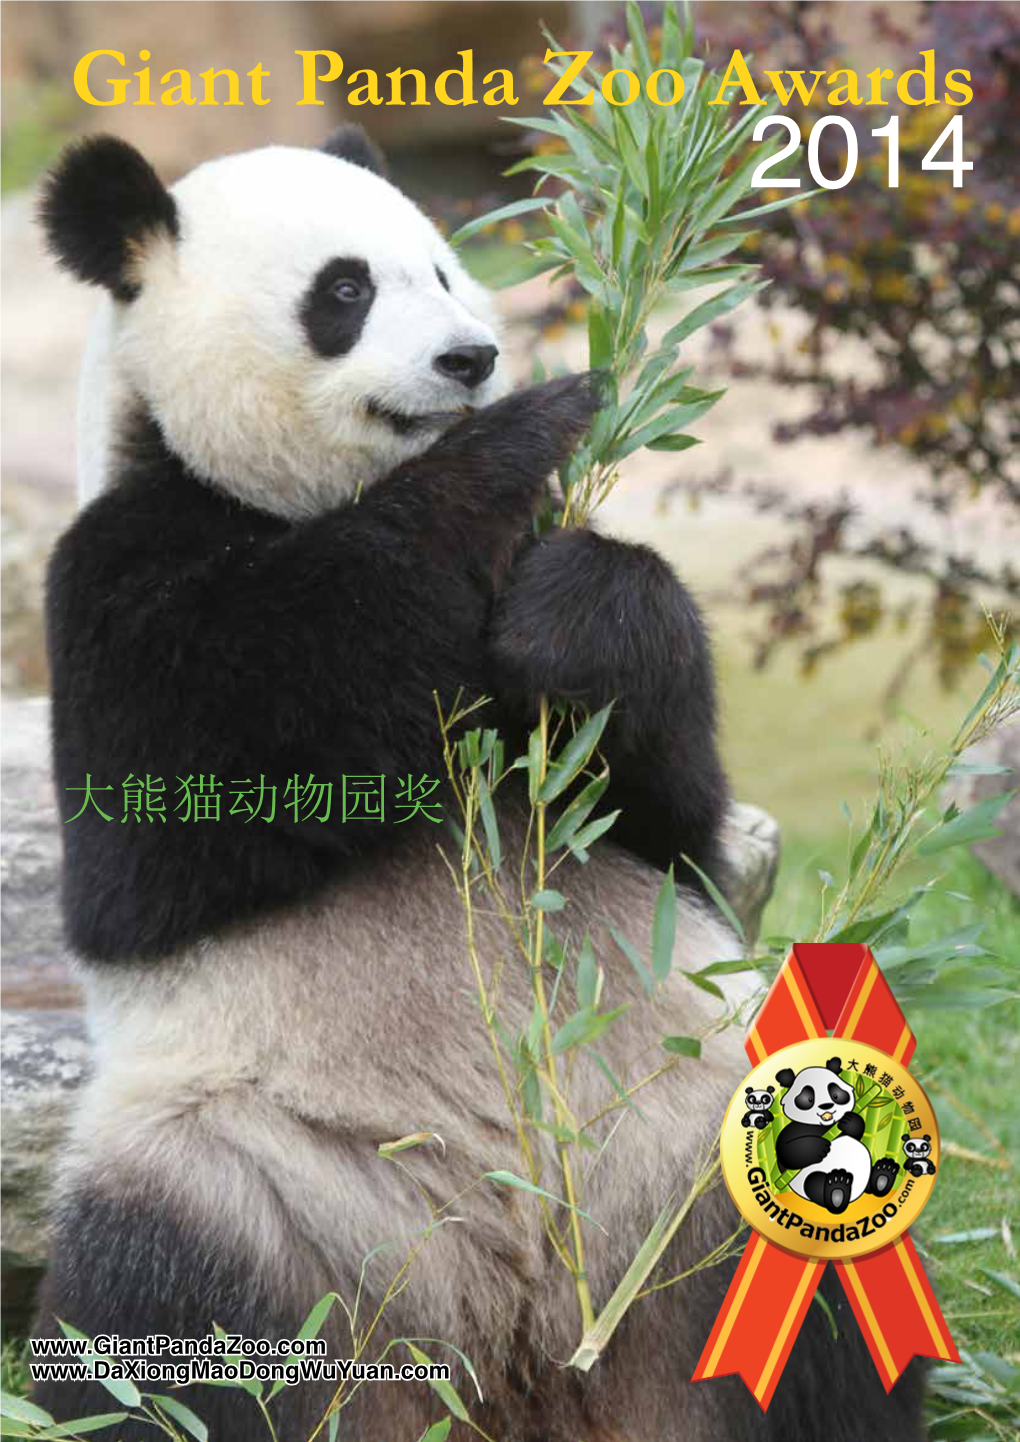 Giant Panda Zoo Awards 2014